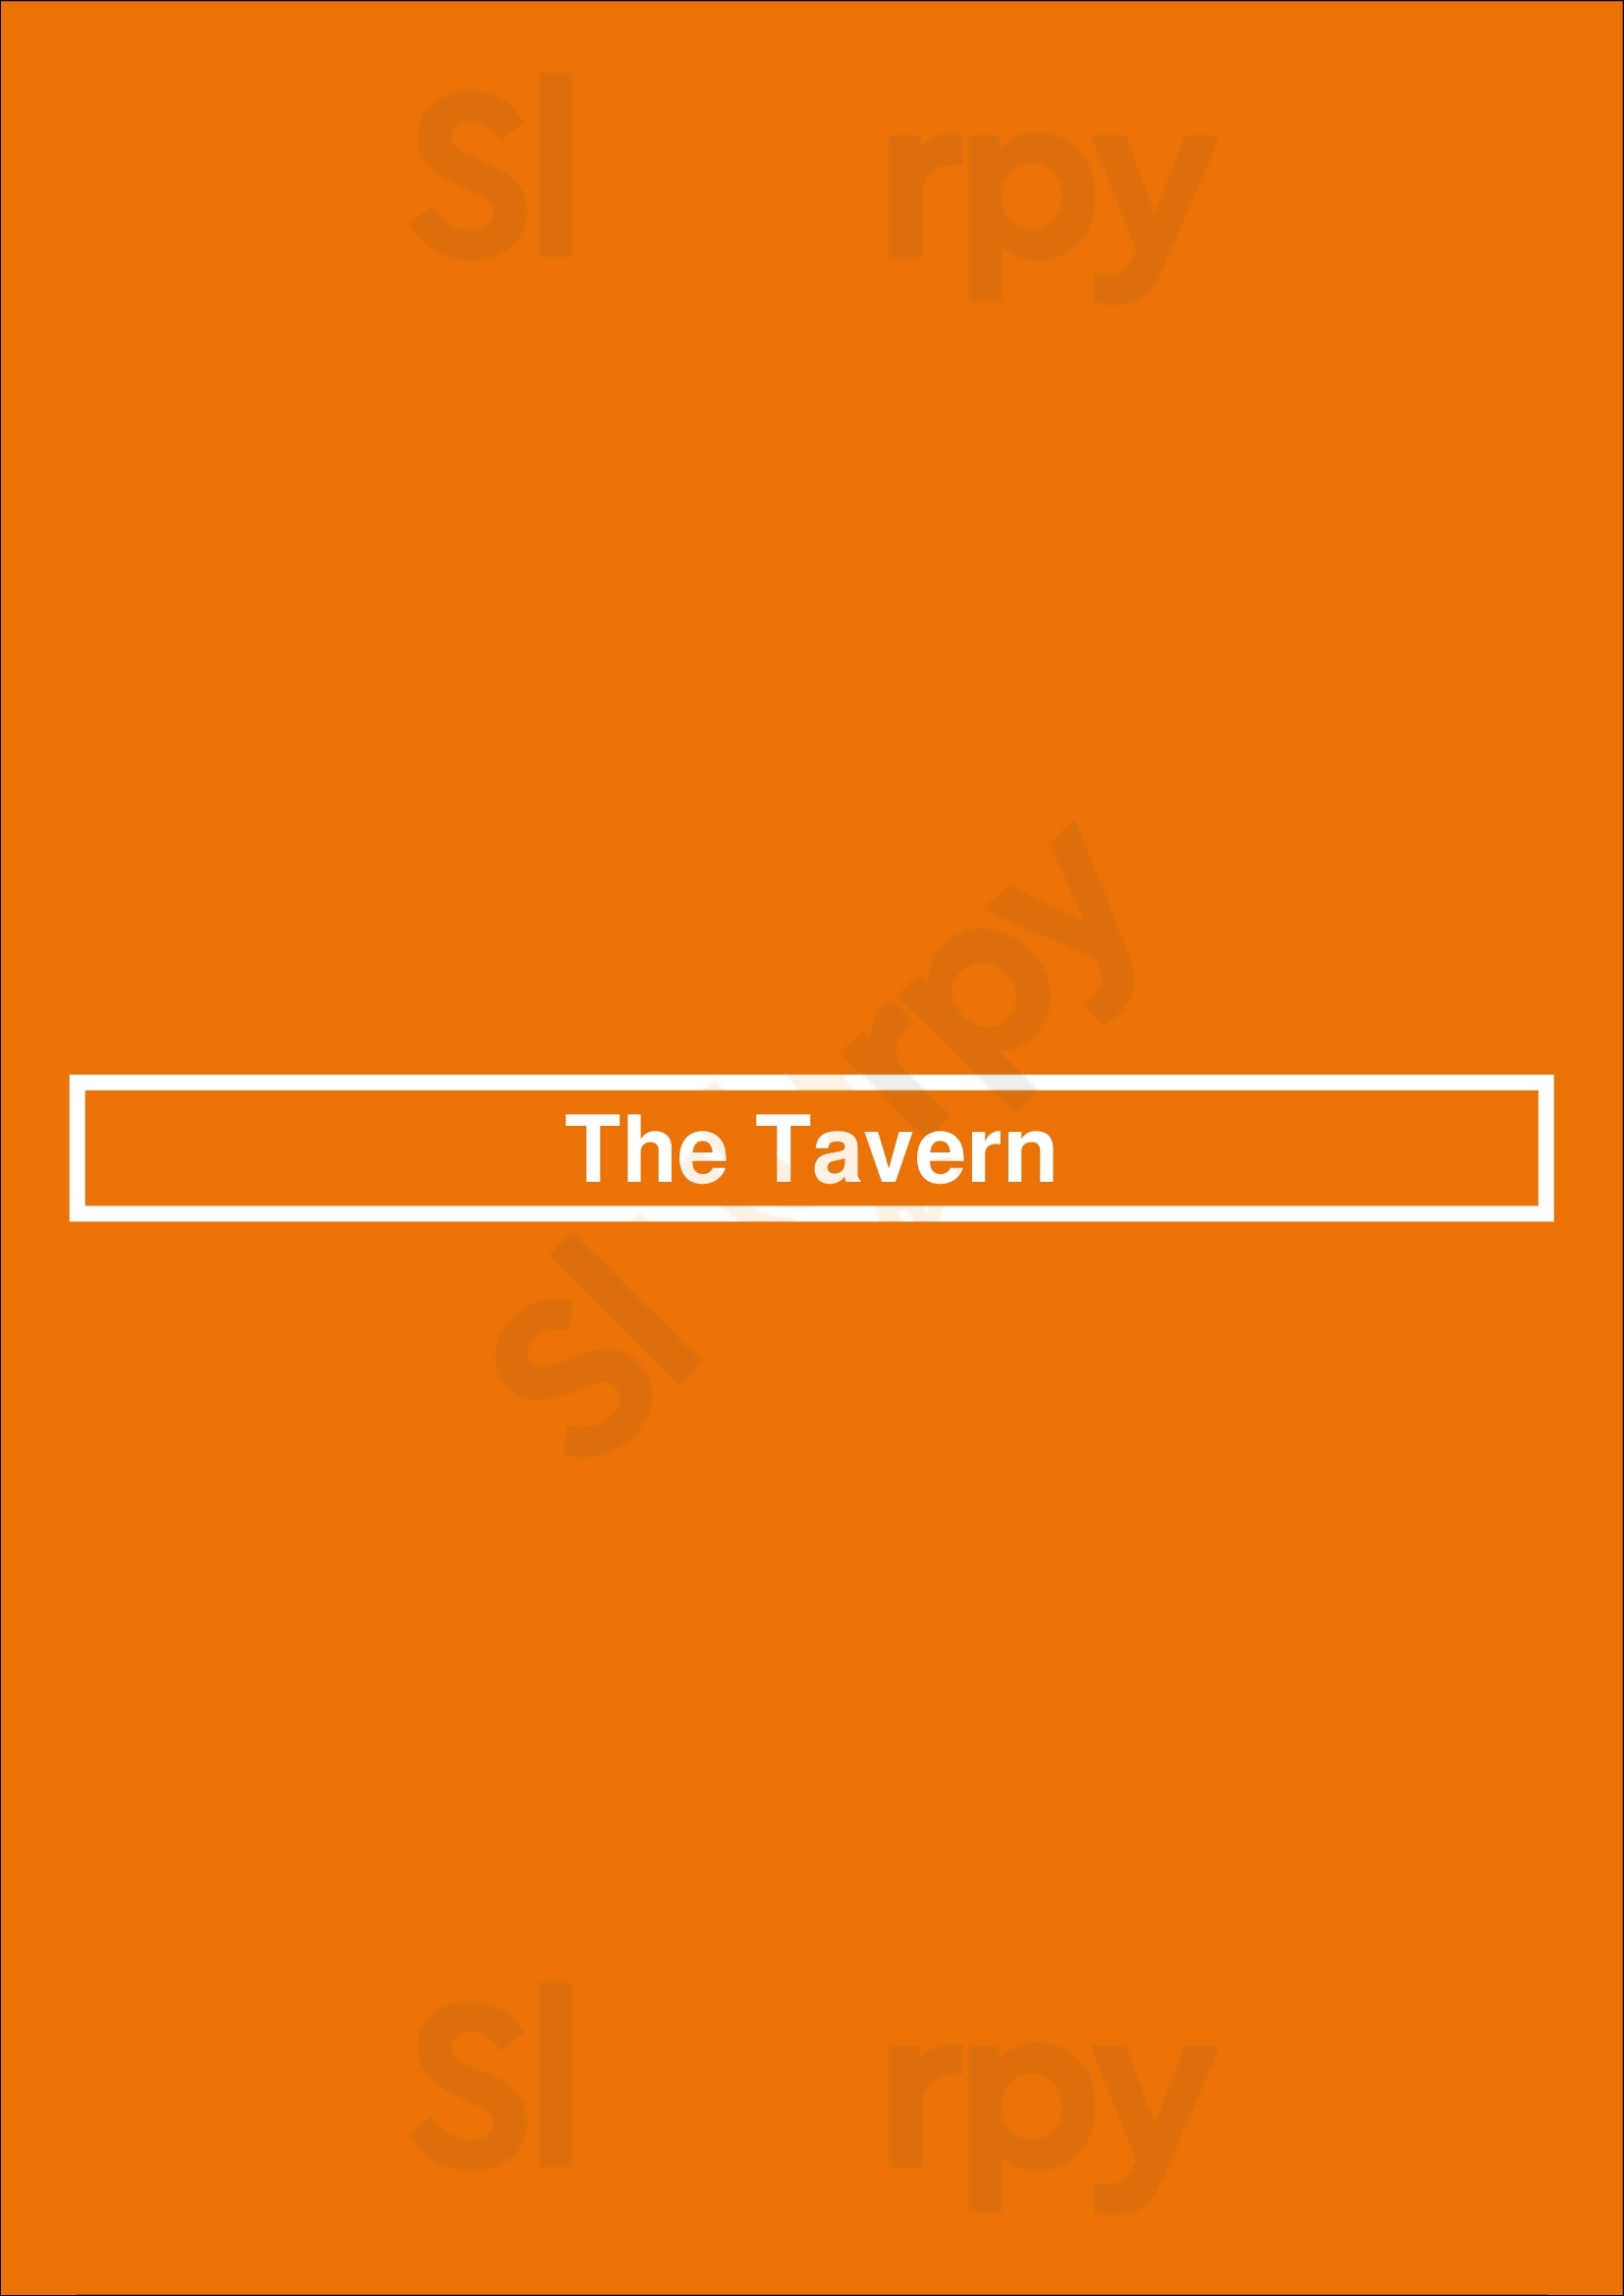 The Tavern Tulsa Menu - 1